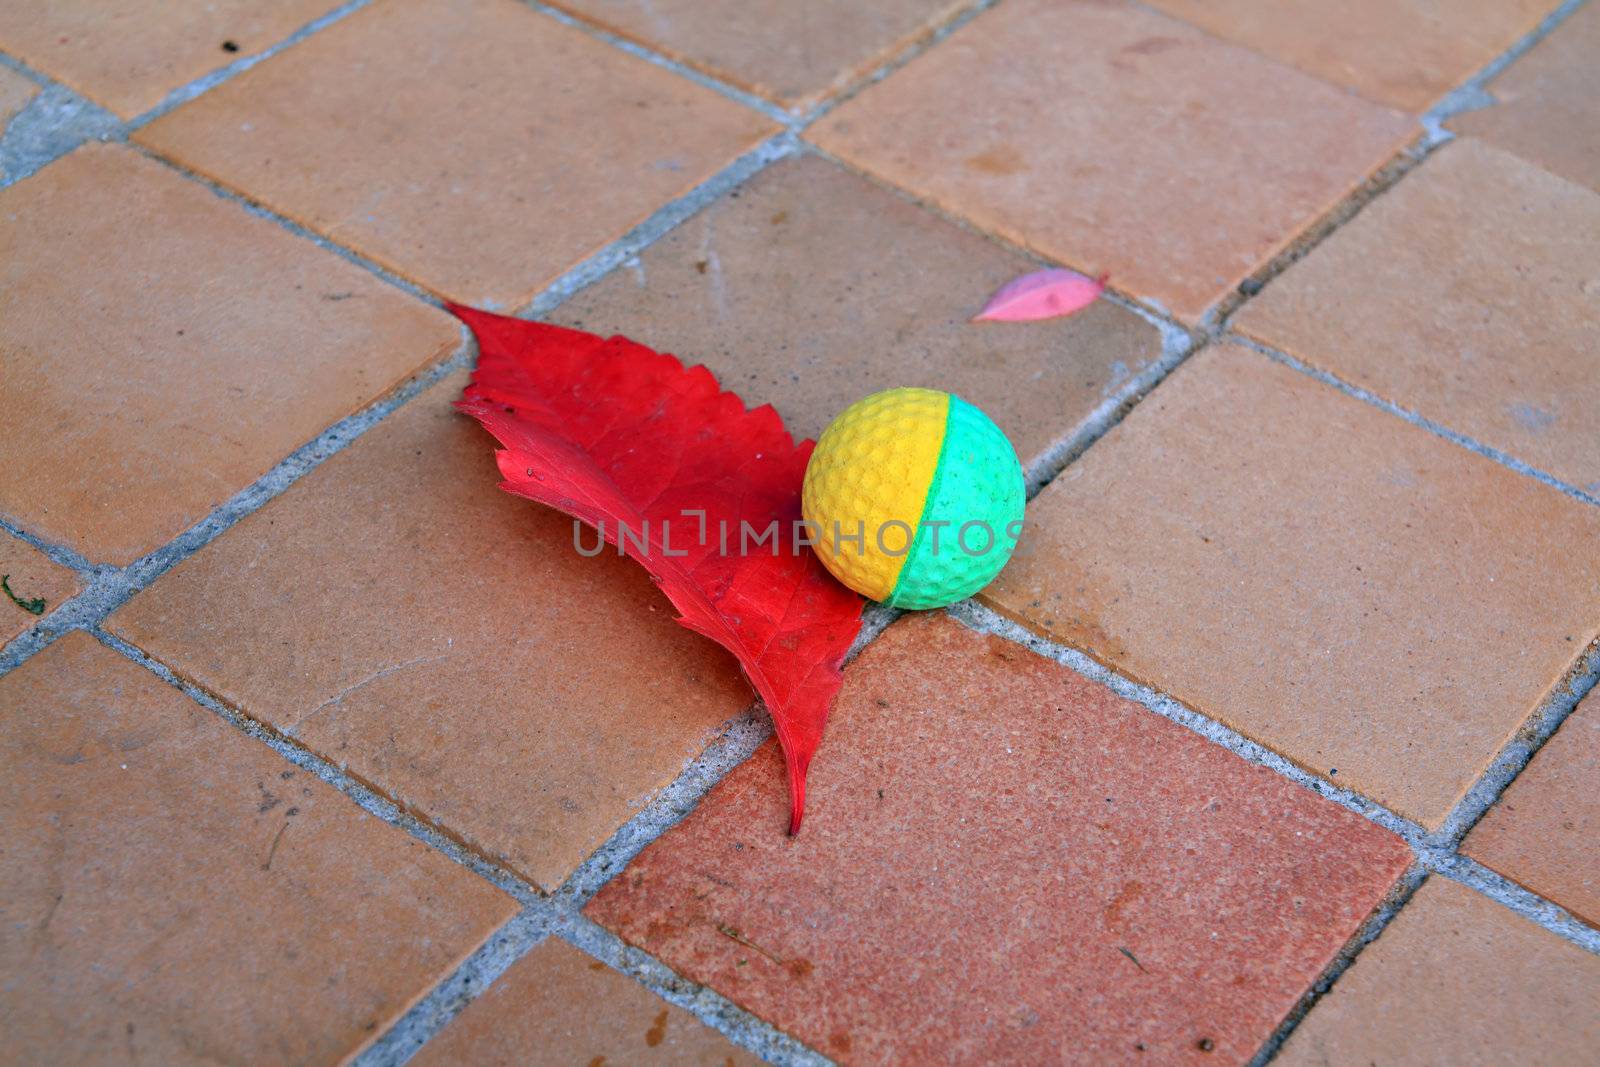 ball near red sheet on tiled floor by basel101658